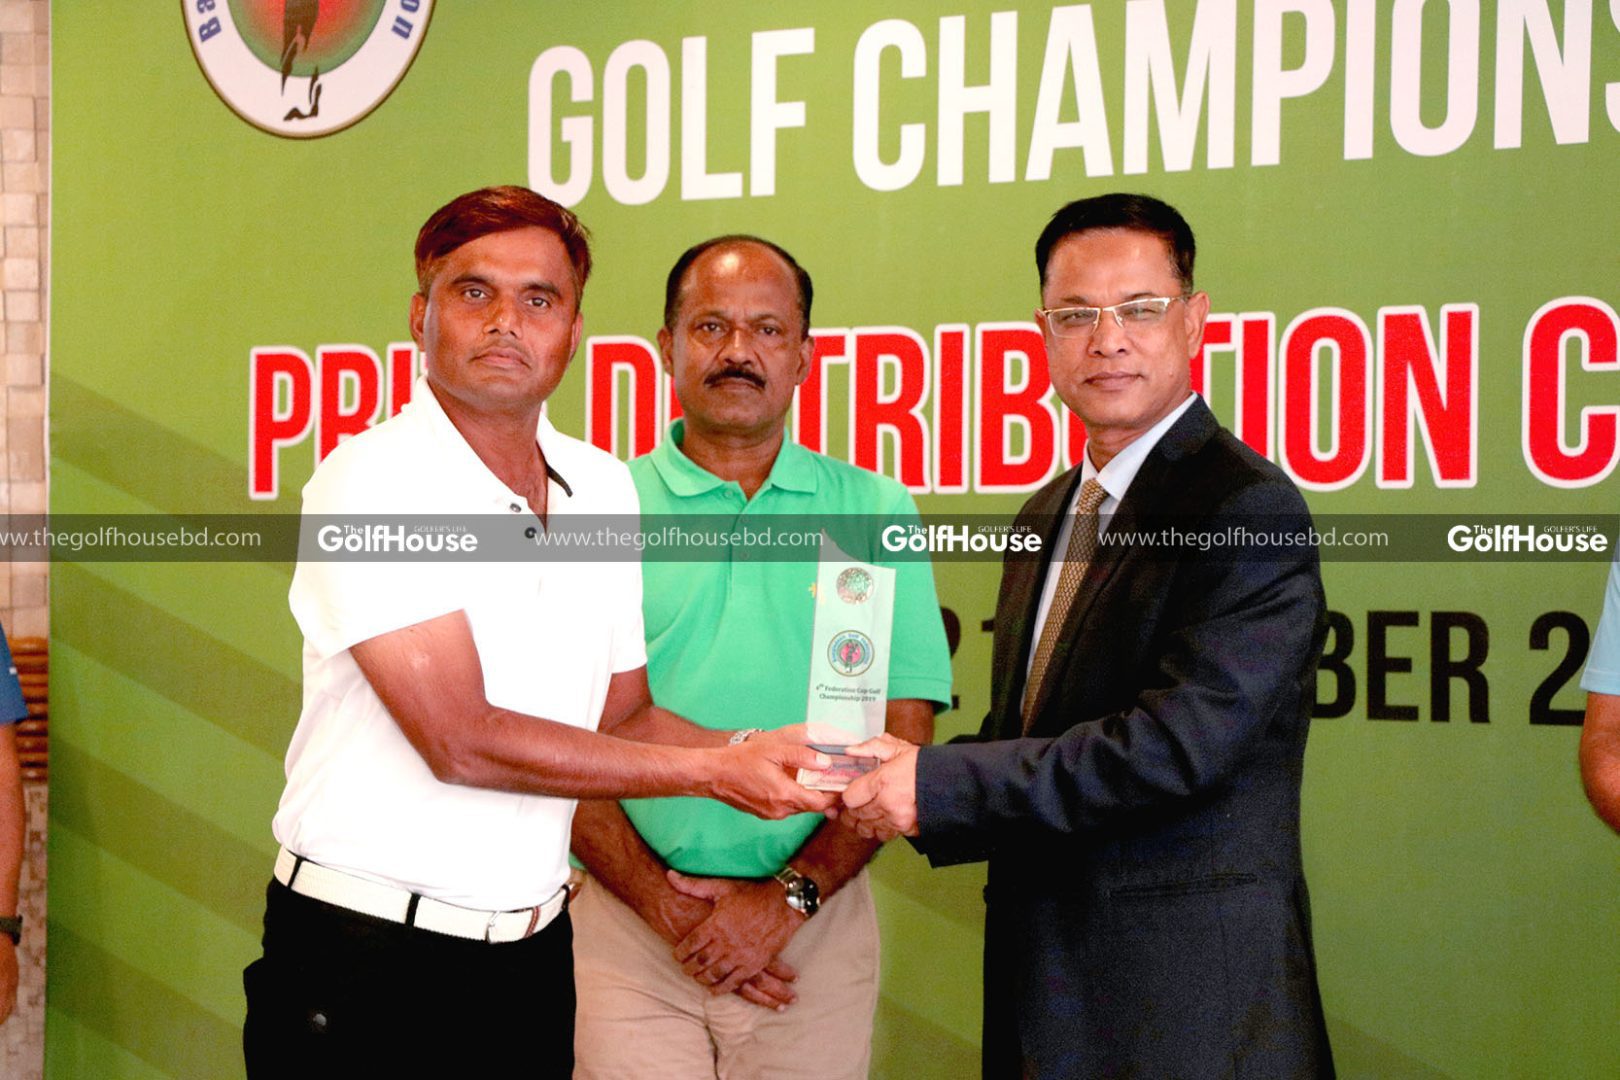 4th Federation Cup Golf Championship 2019